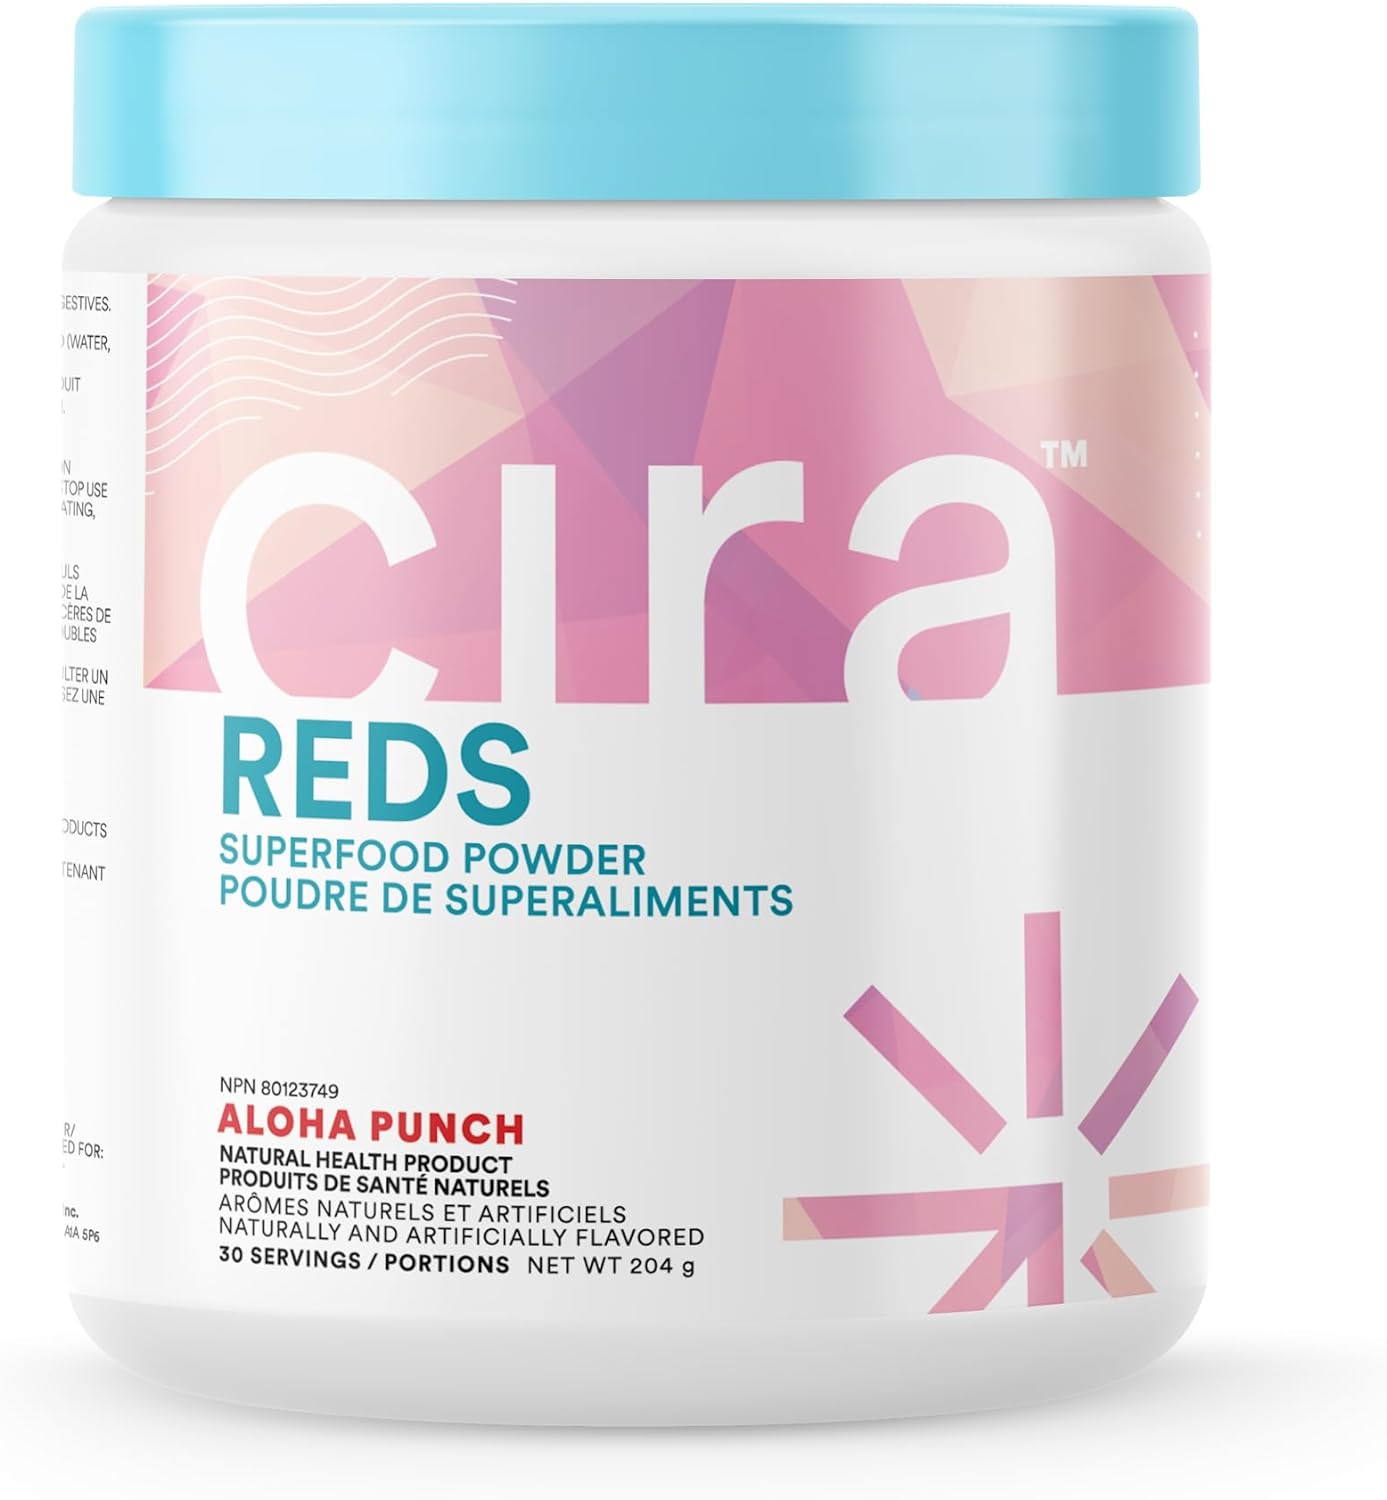 Cira Glow-Getter Reds Superfood Powder - Antioxidants & Polyphenols fo